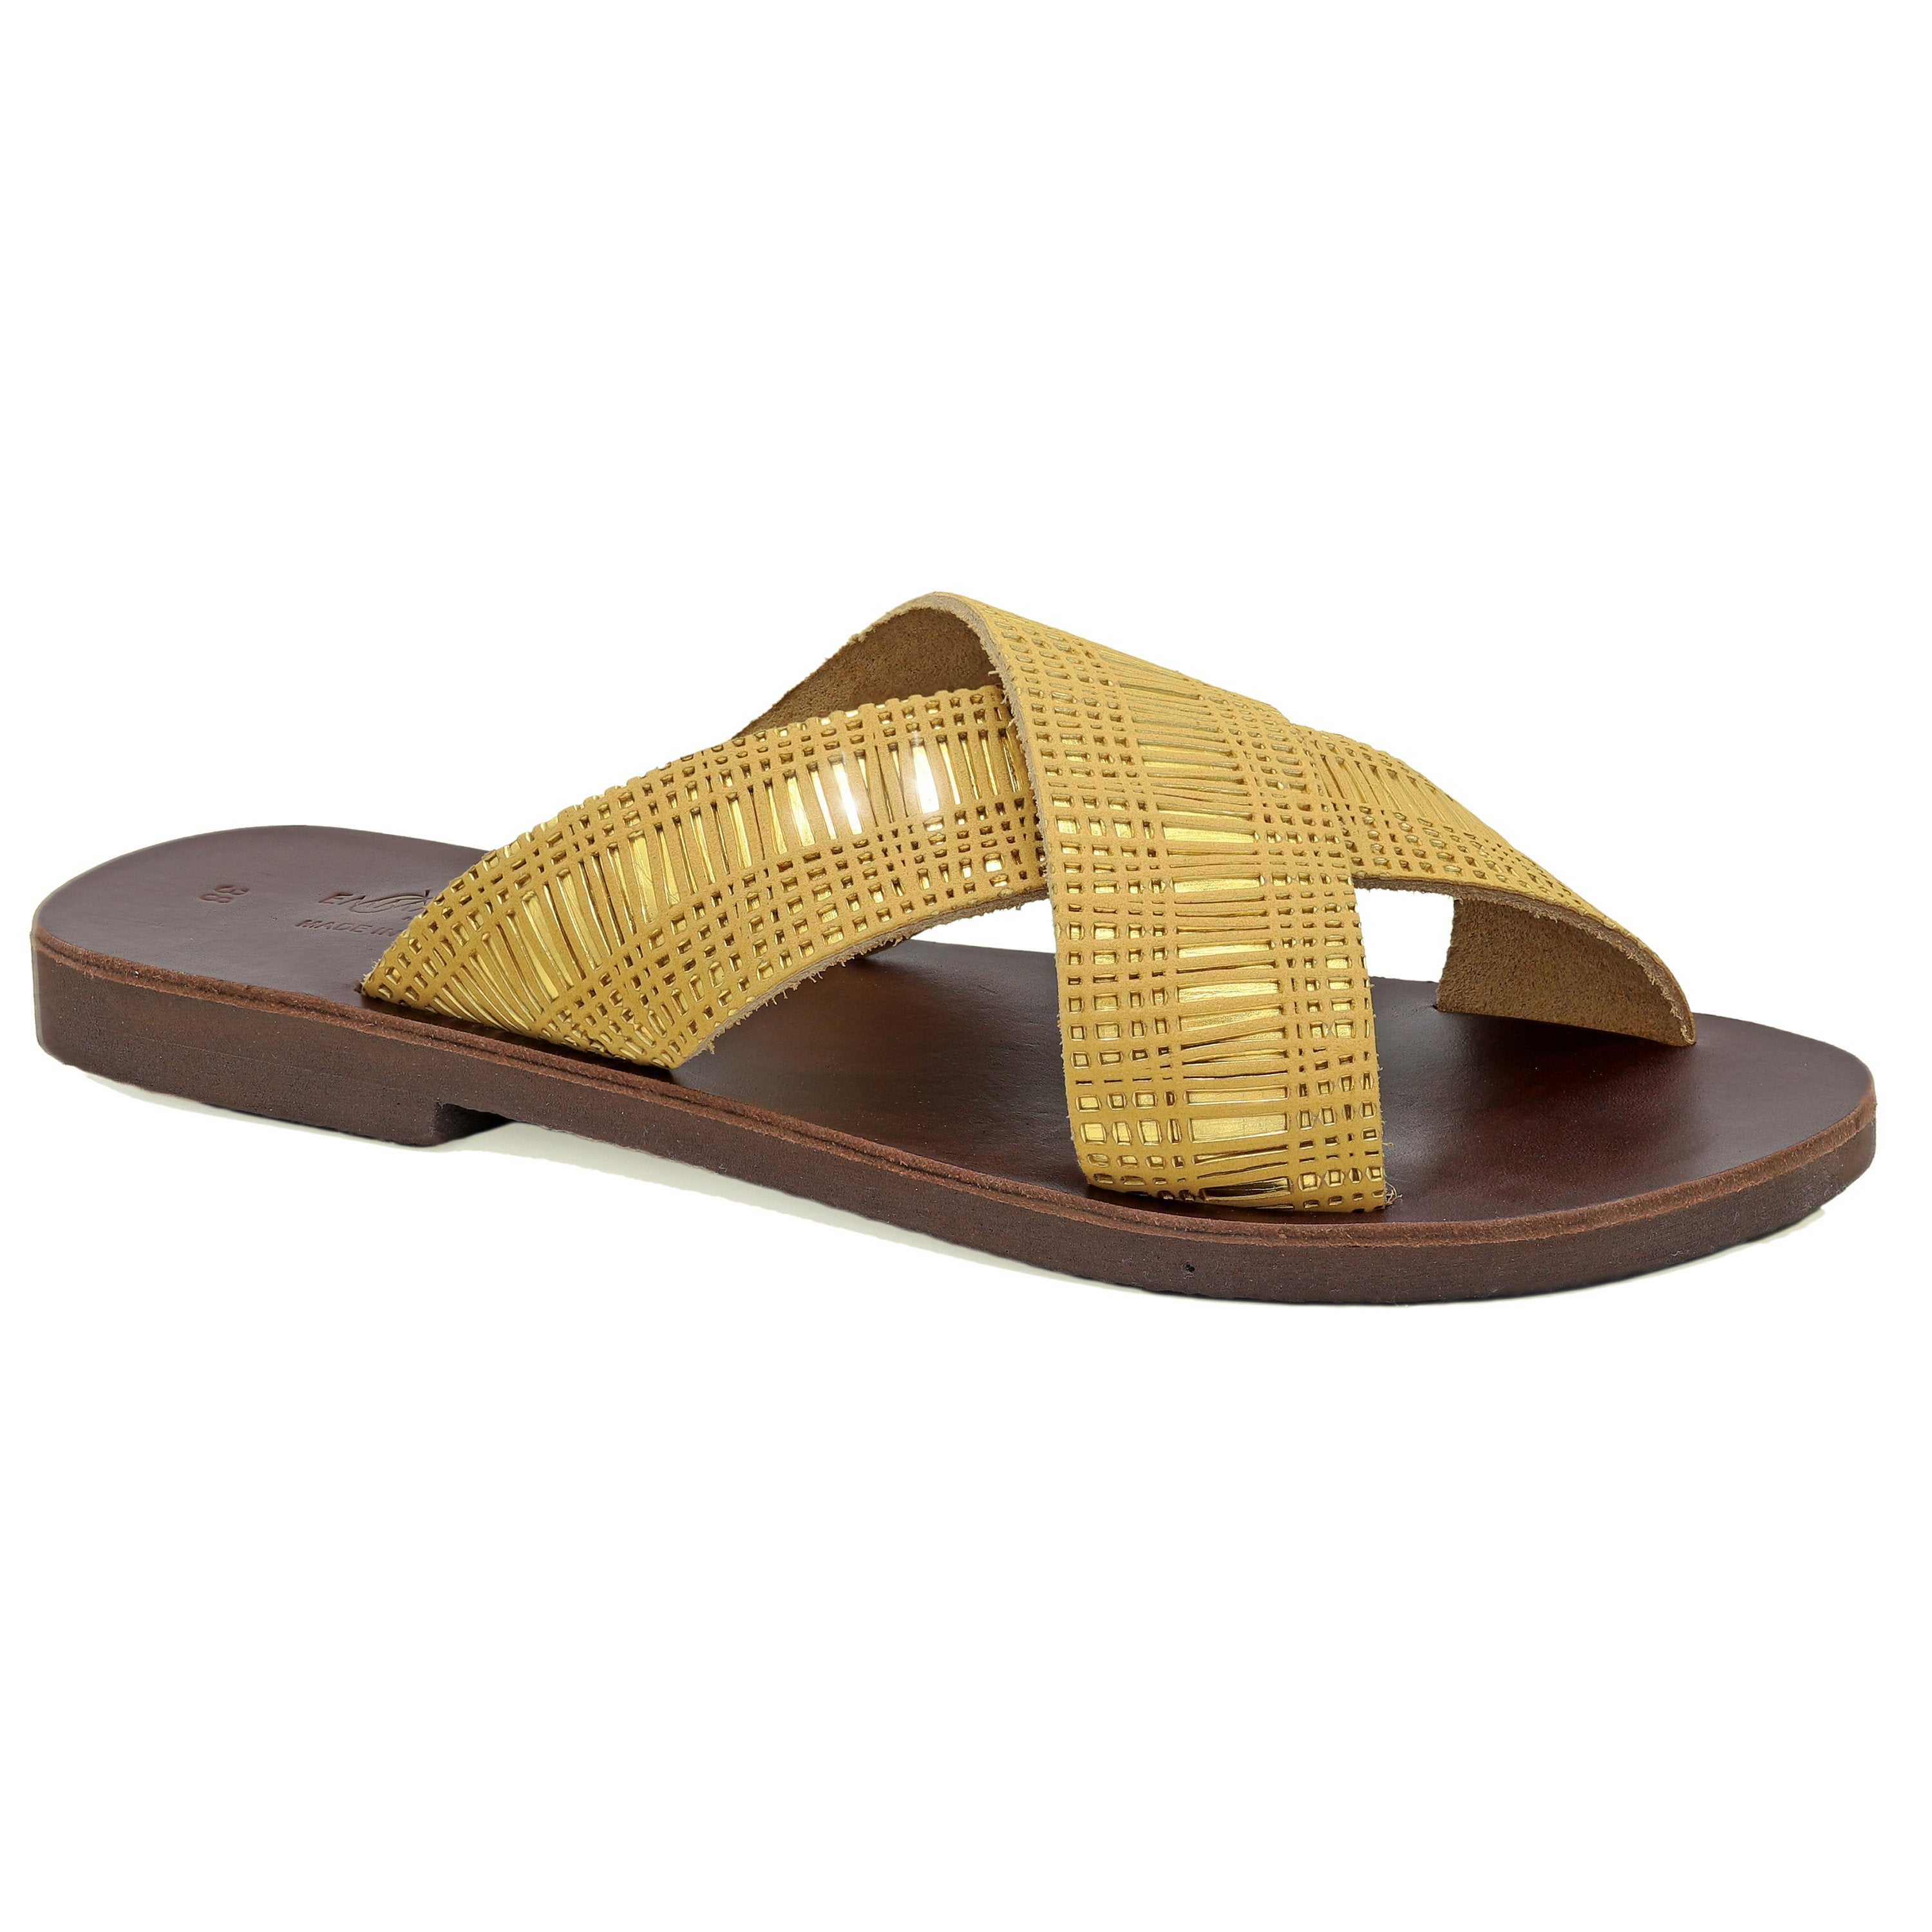 Leather Sandals Women, Greek Sandals, Gold Slide Sandals, Metallic Flat Shoes, Gold Summer Shoes, Ekavi Design